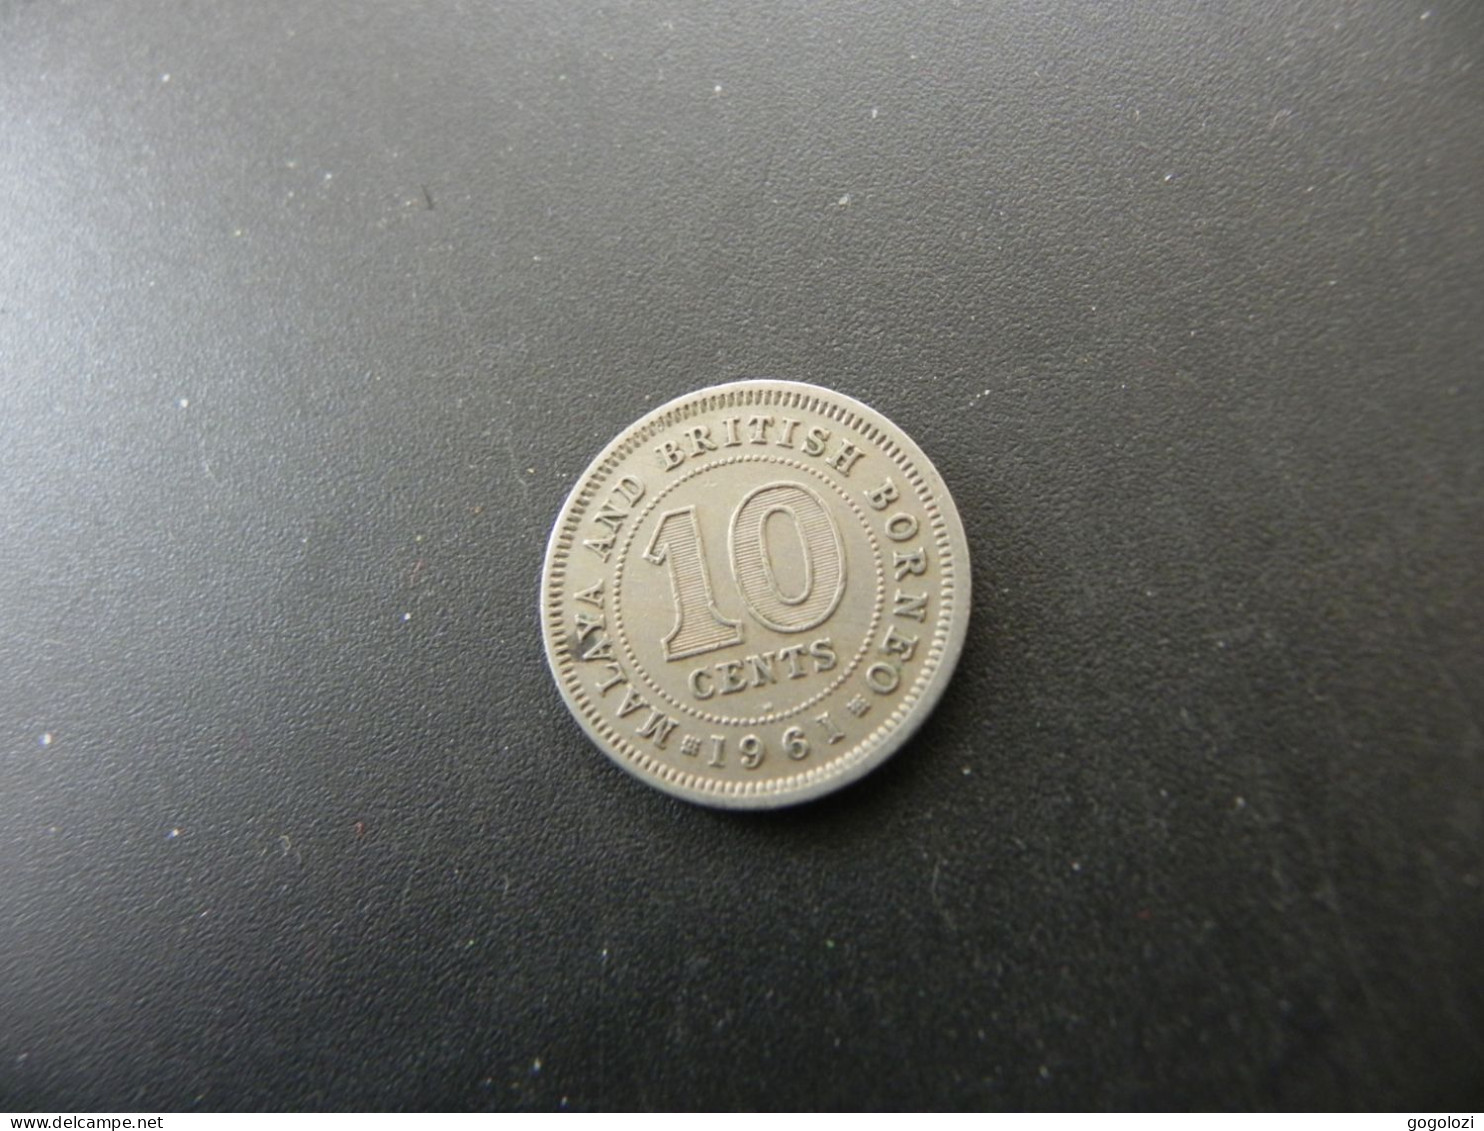 Malaya And British Borneo 10 Cents 1961 - Maleisië